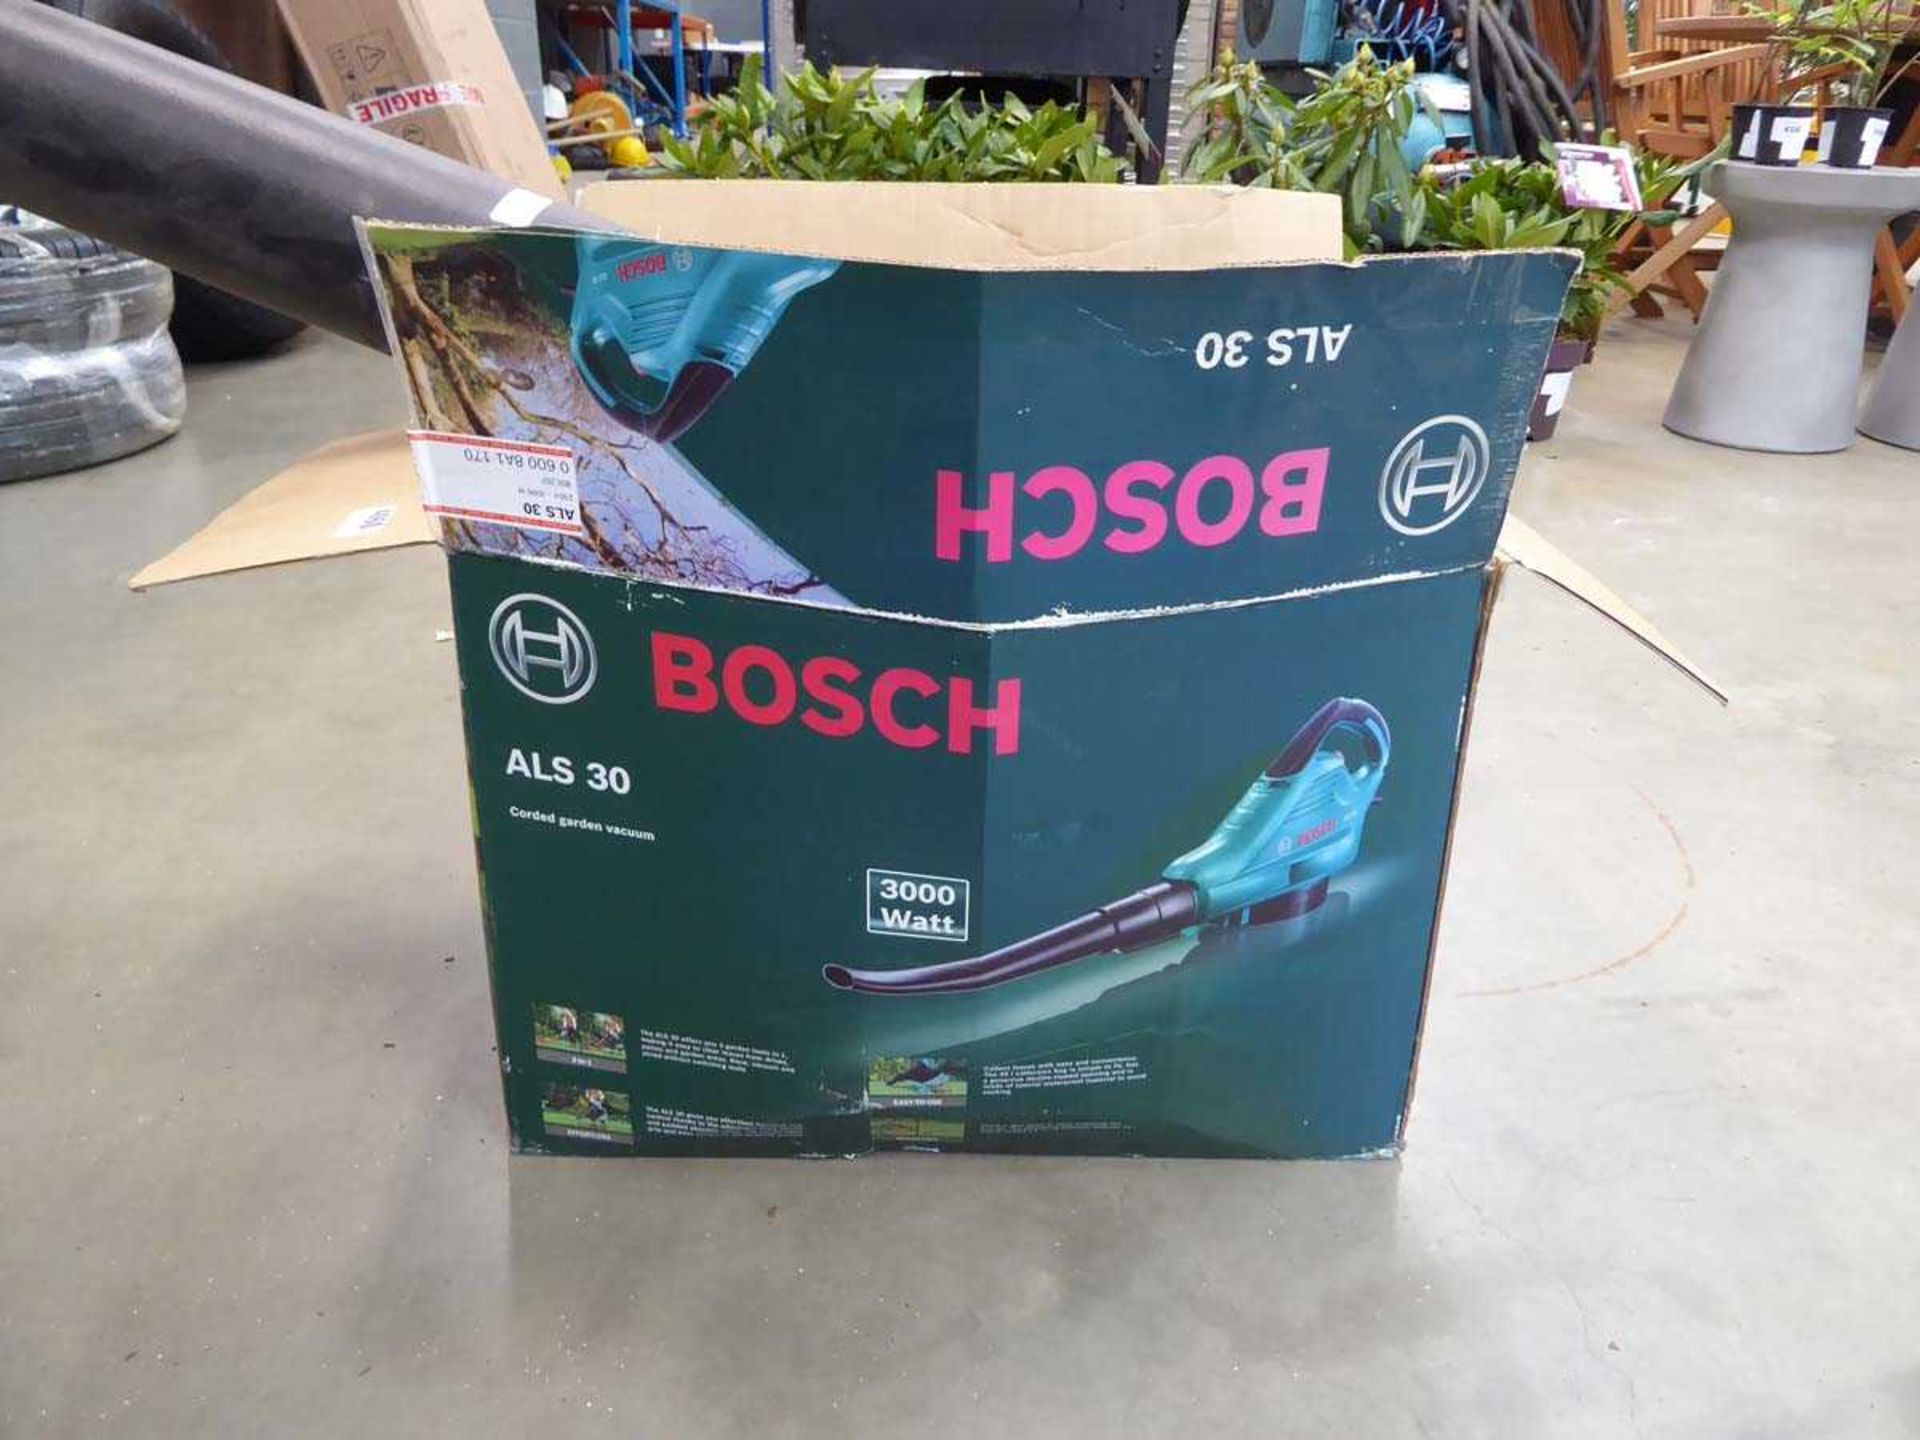 Boxed Bosch electric leaf blower